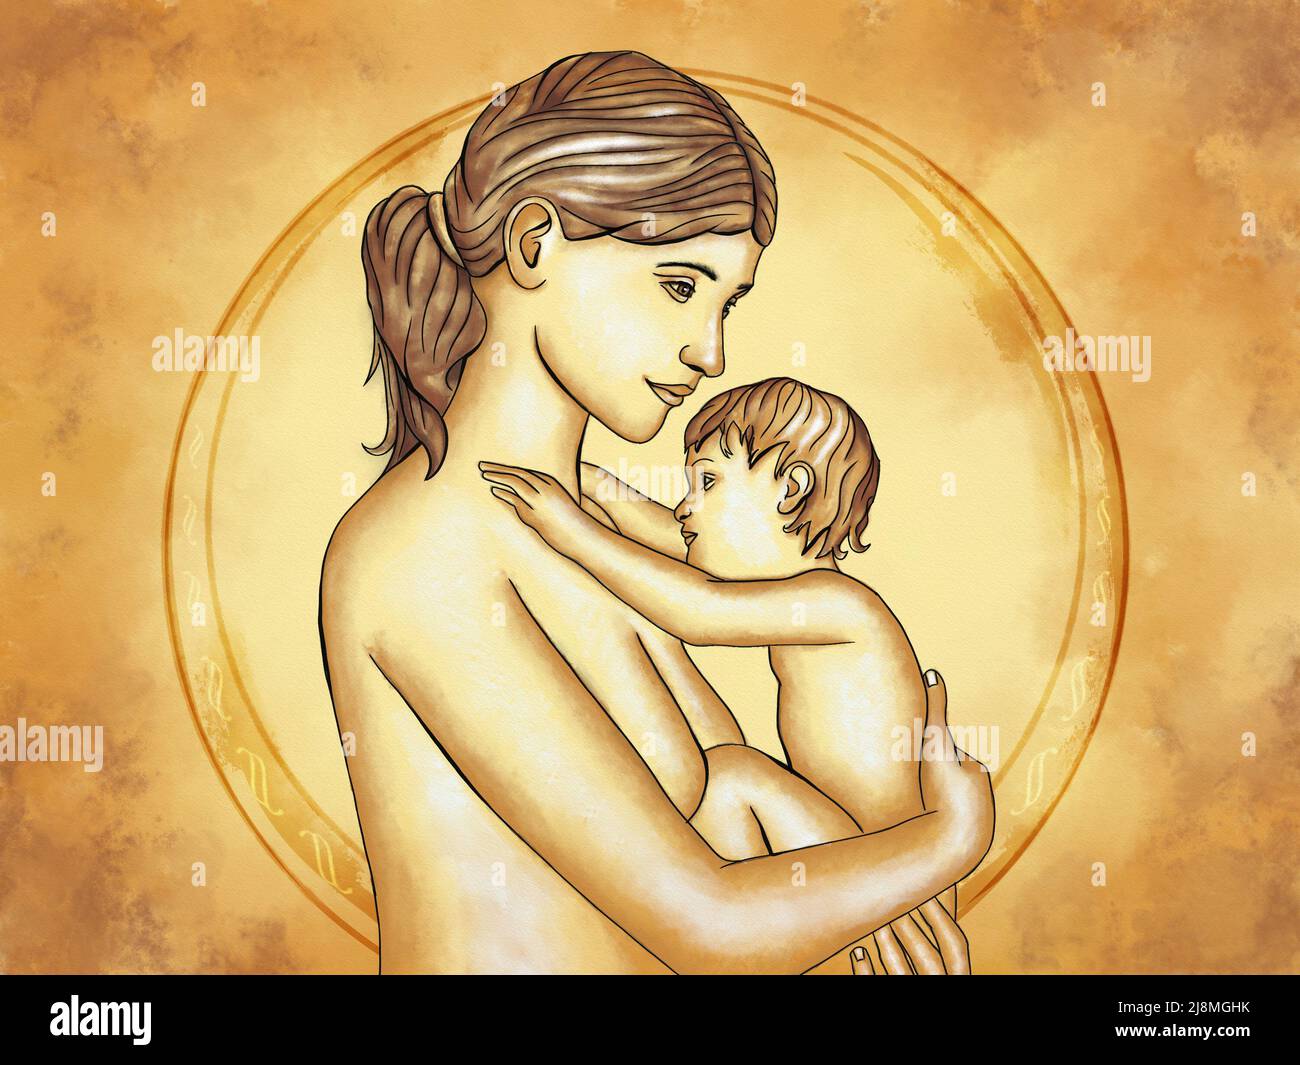 Mother and child hugging. Digital illustration. Stock Photo